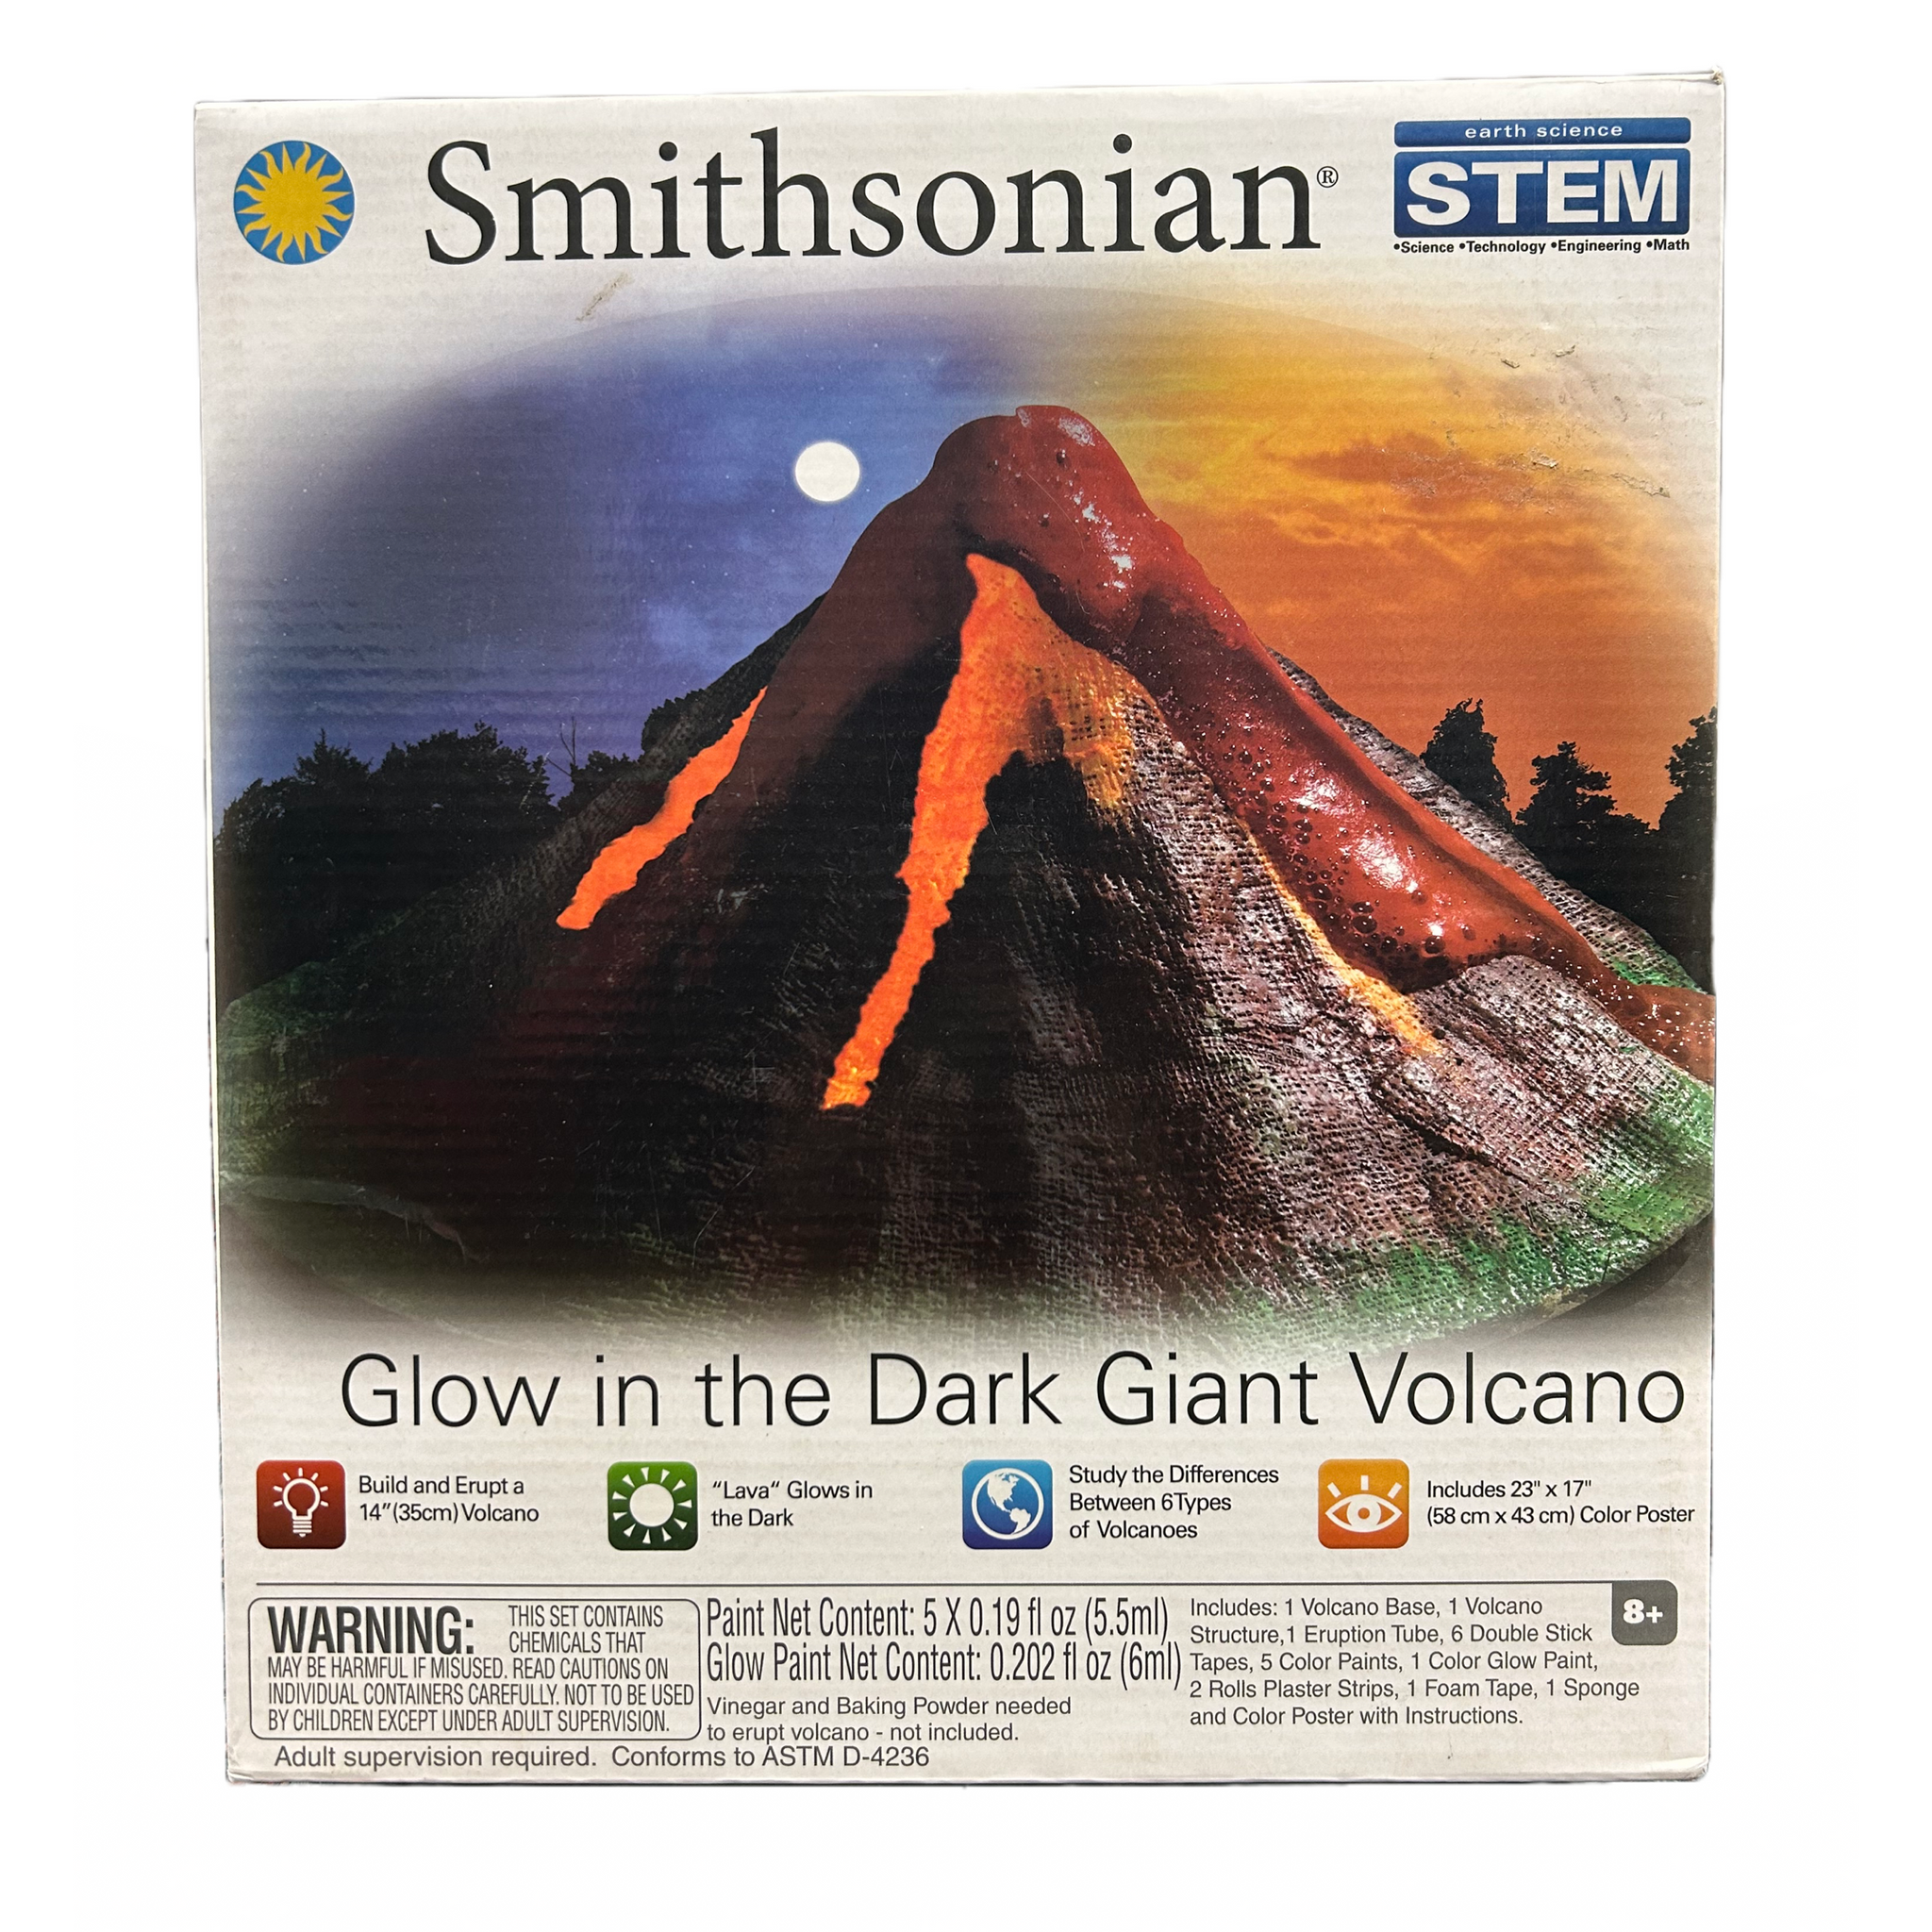 NWT Smithsonian Stem Giant Volcano